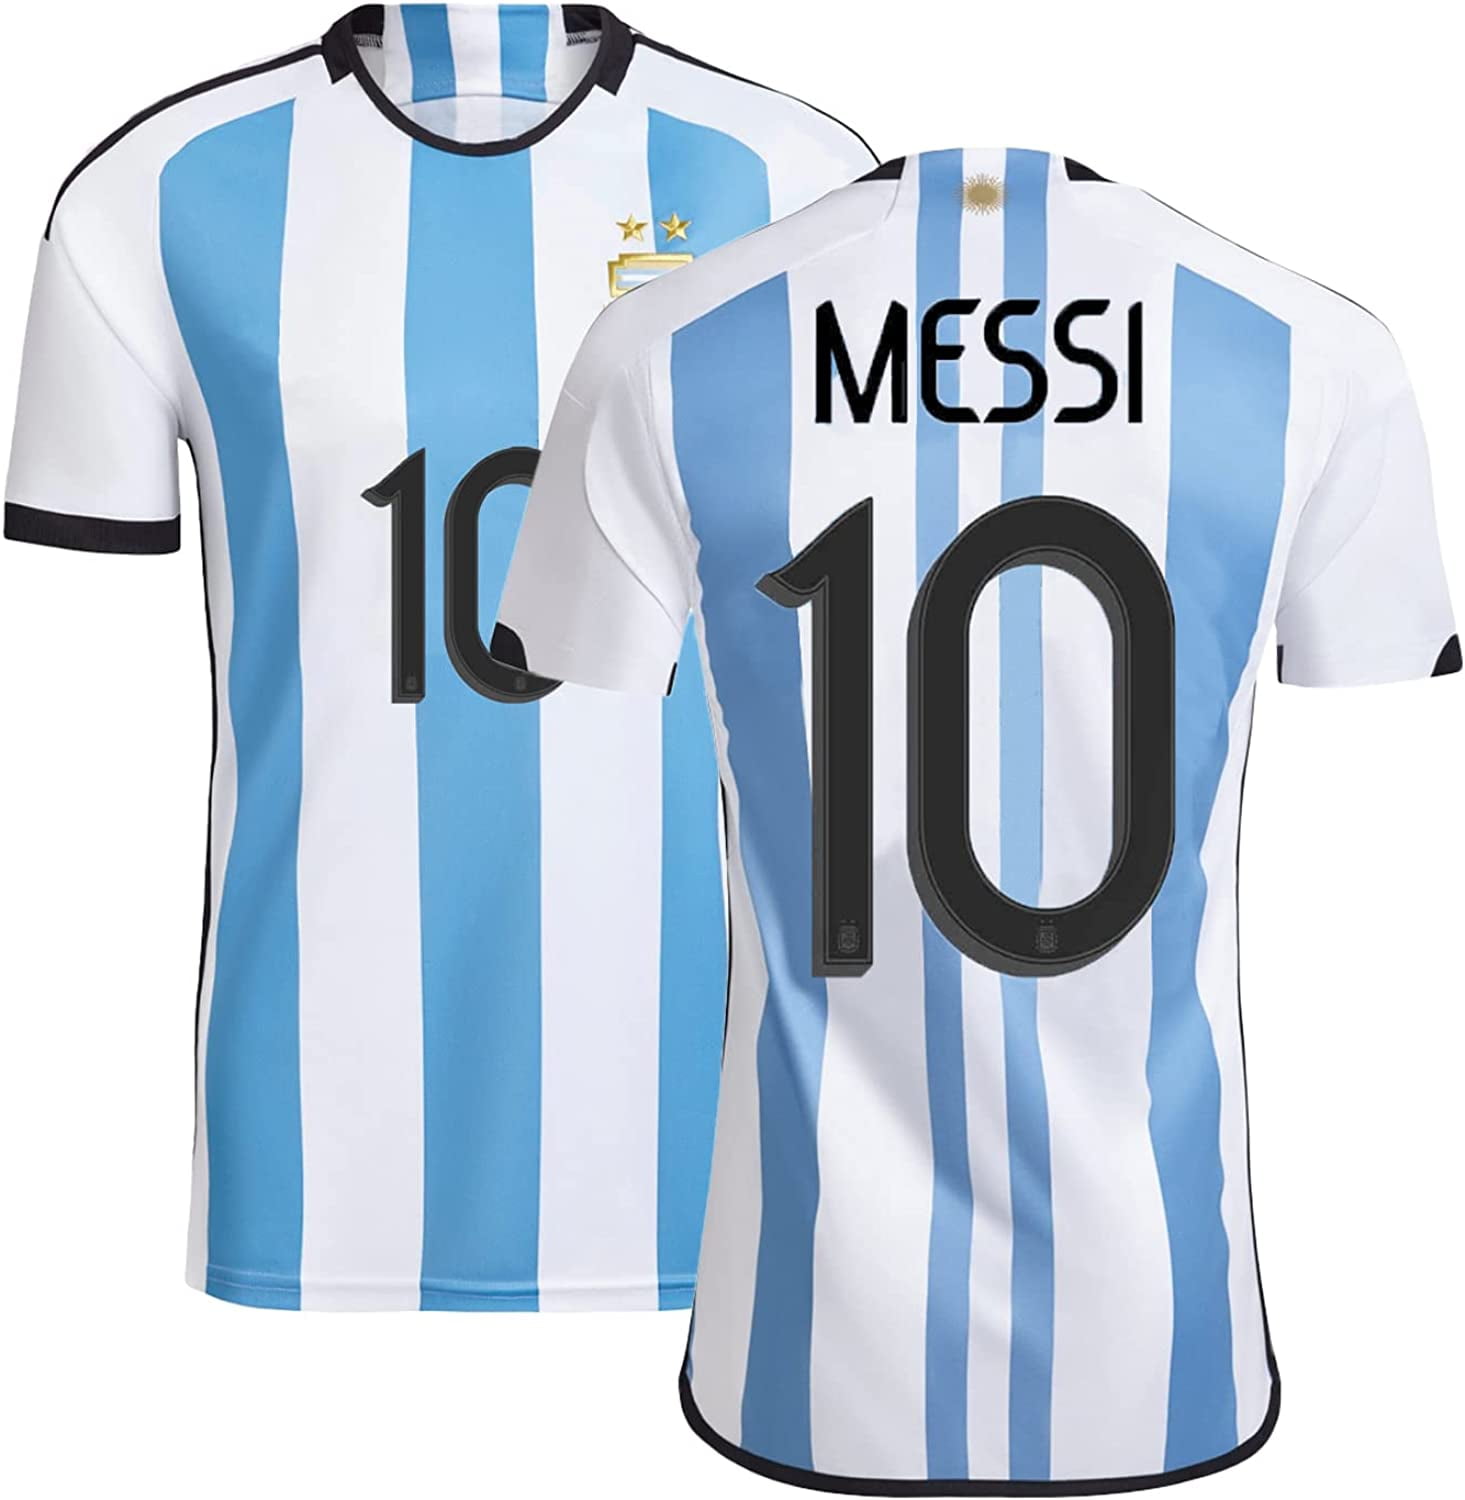 argentina soccer jersey 6-1,